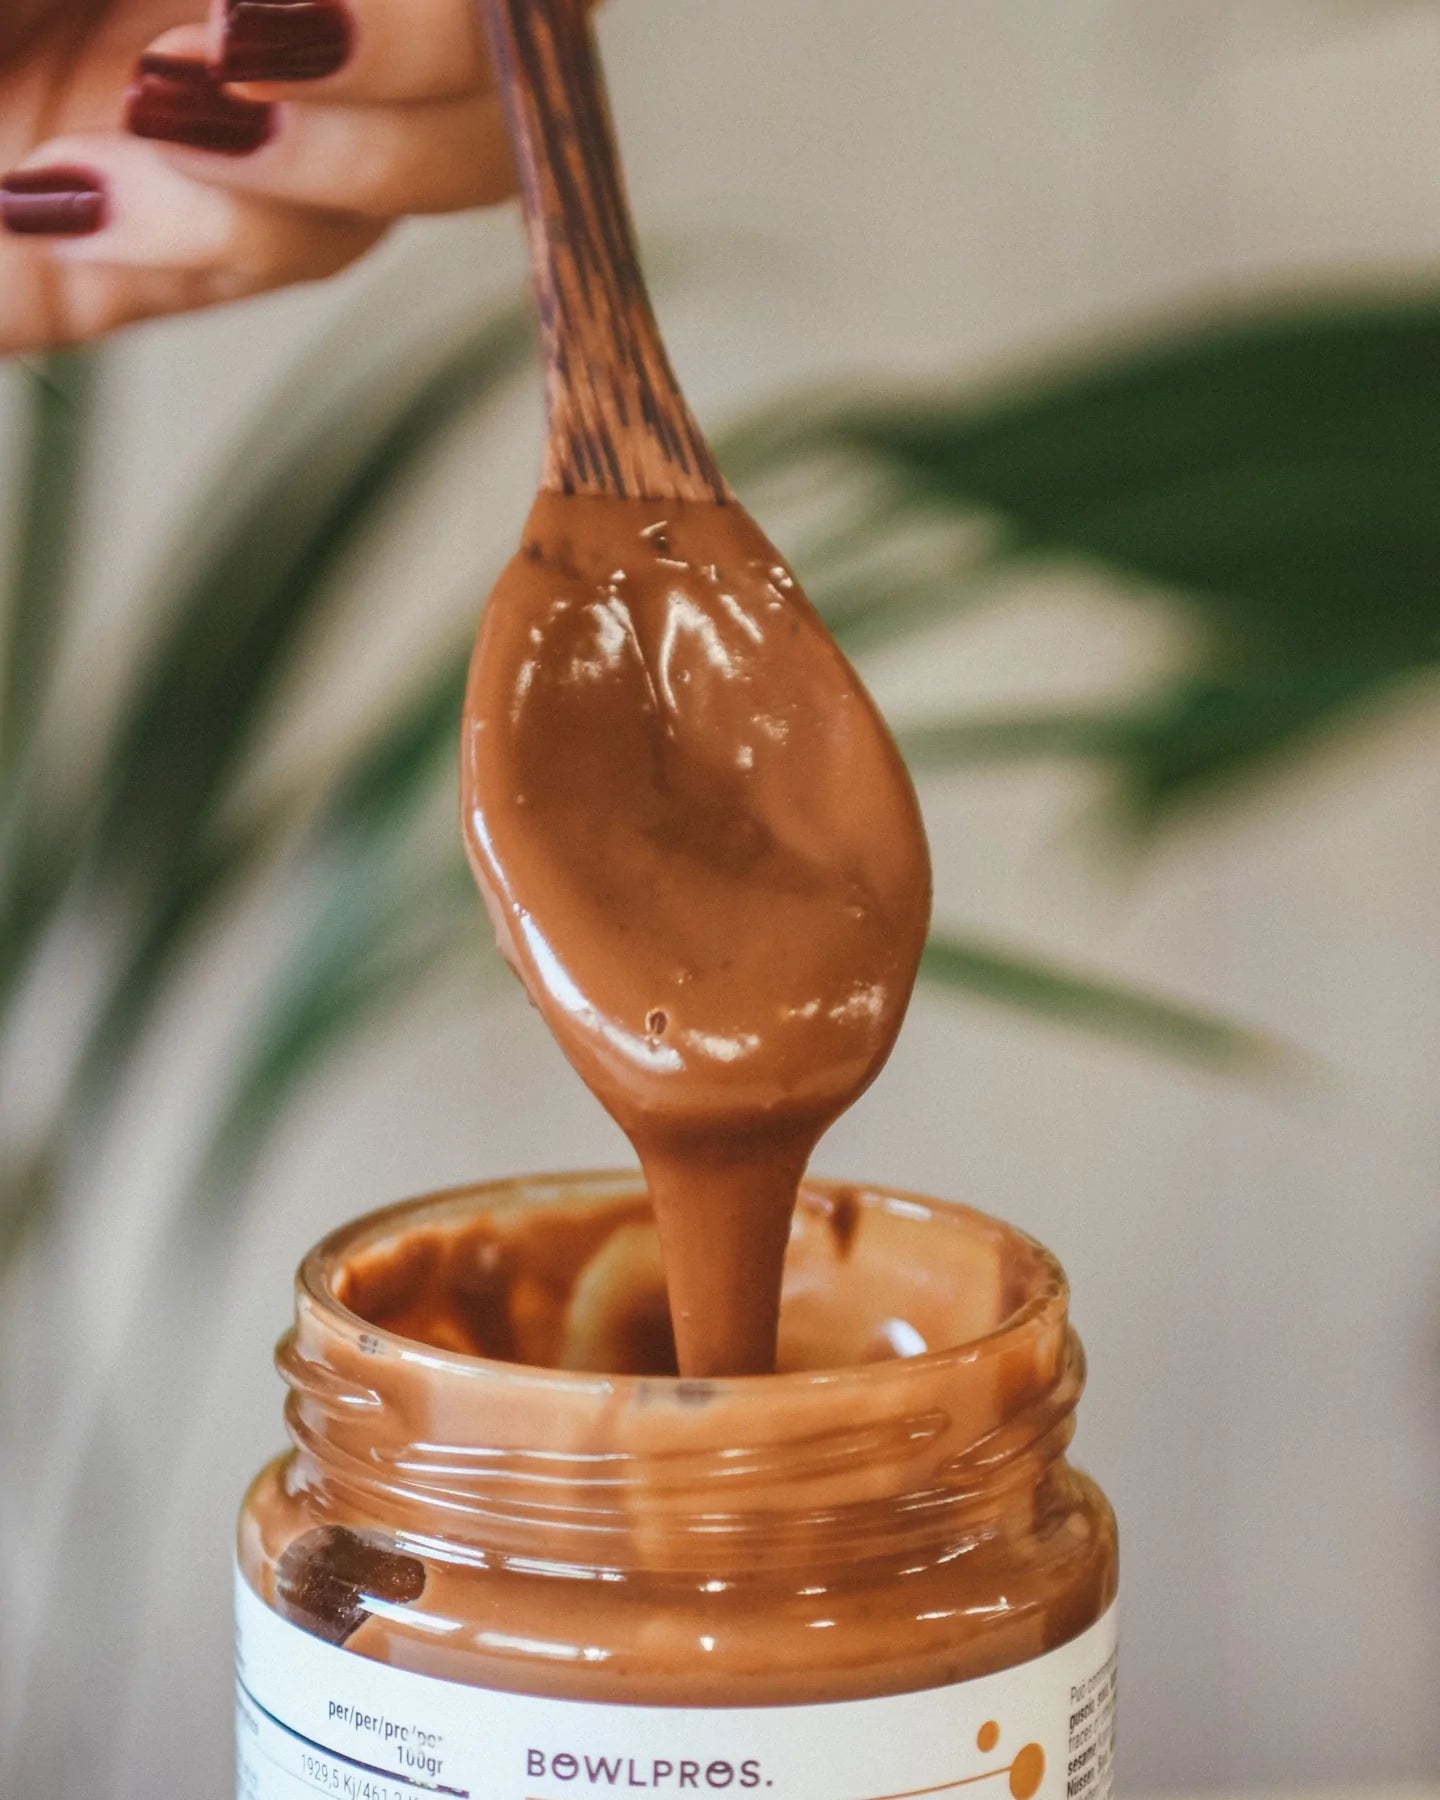 Crema Proteica | Cacao, Arachidi e Caramello Salato